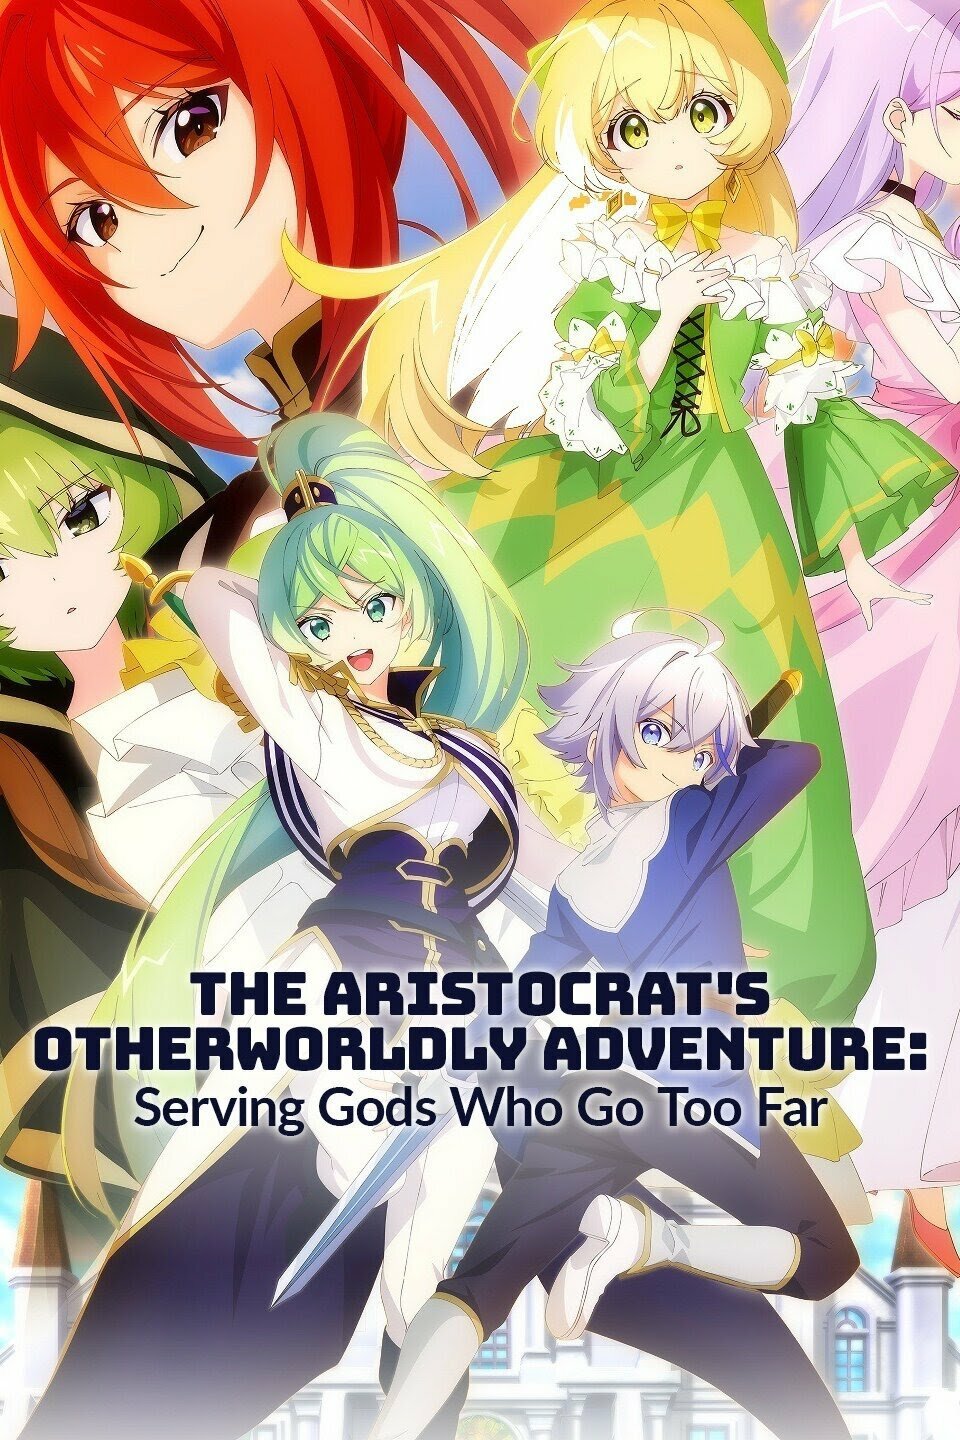 O Anime The Aristocrat's Otherworldly Adventure, adiciona 3